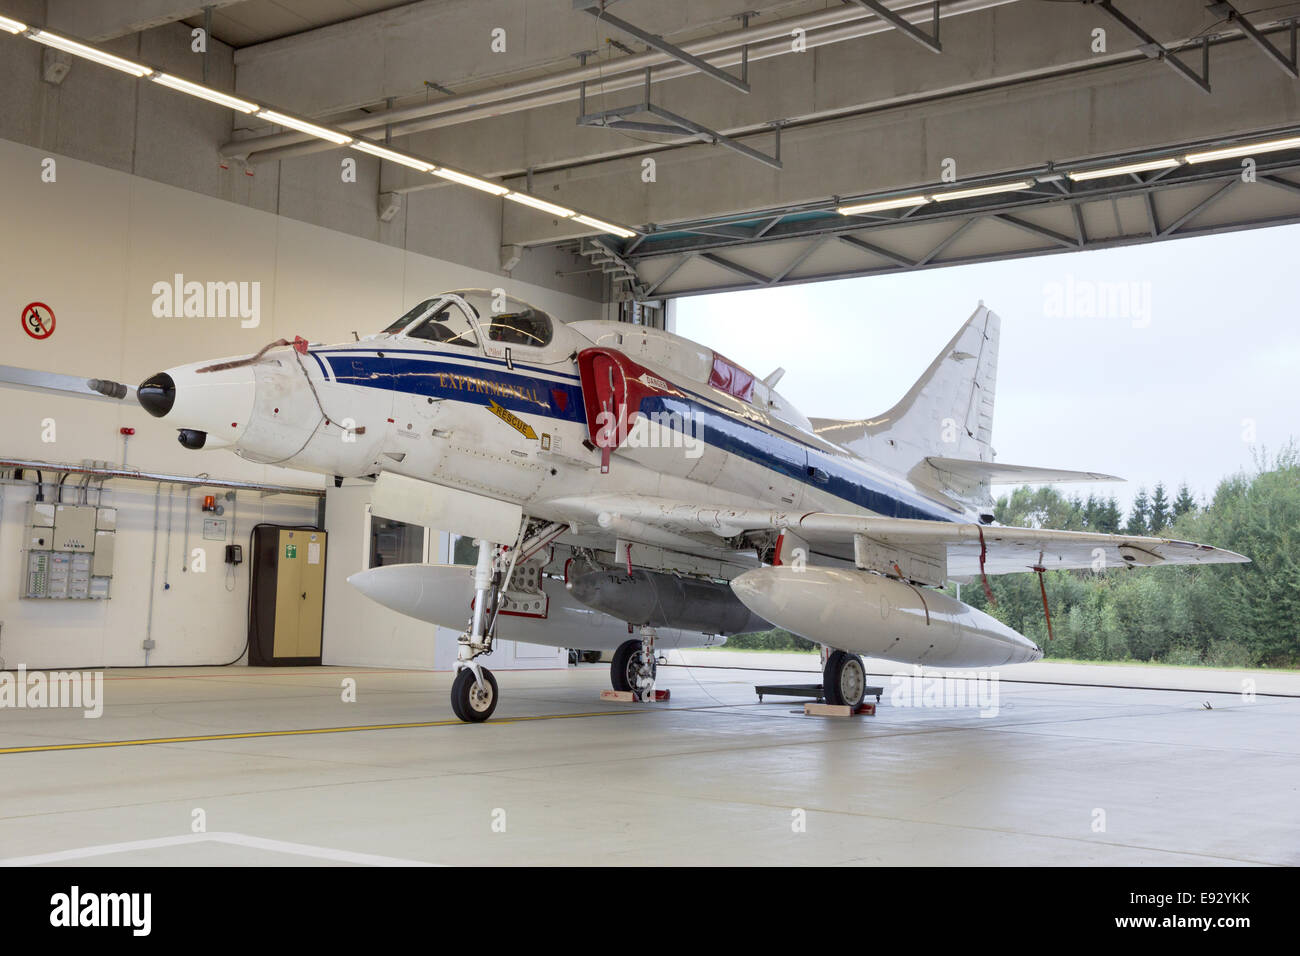 A-4 Skyhawk fighter jet in a hangar Stock Photo